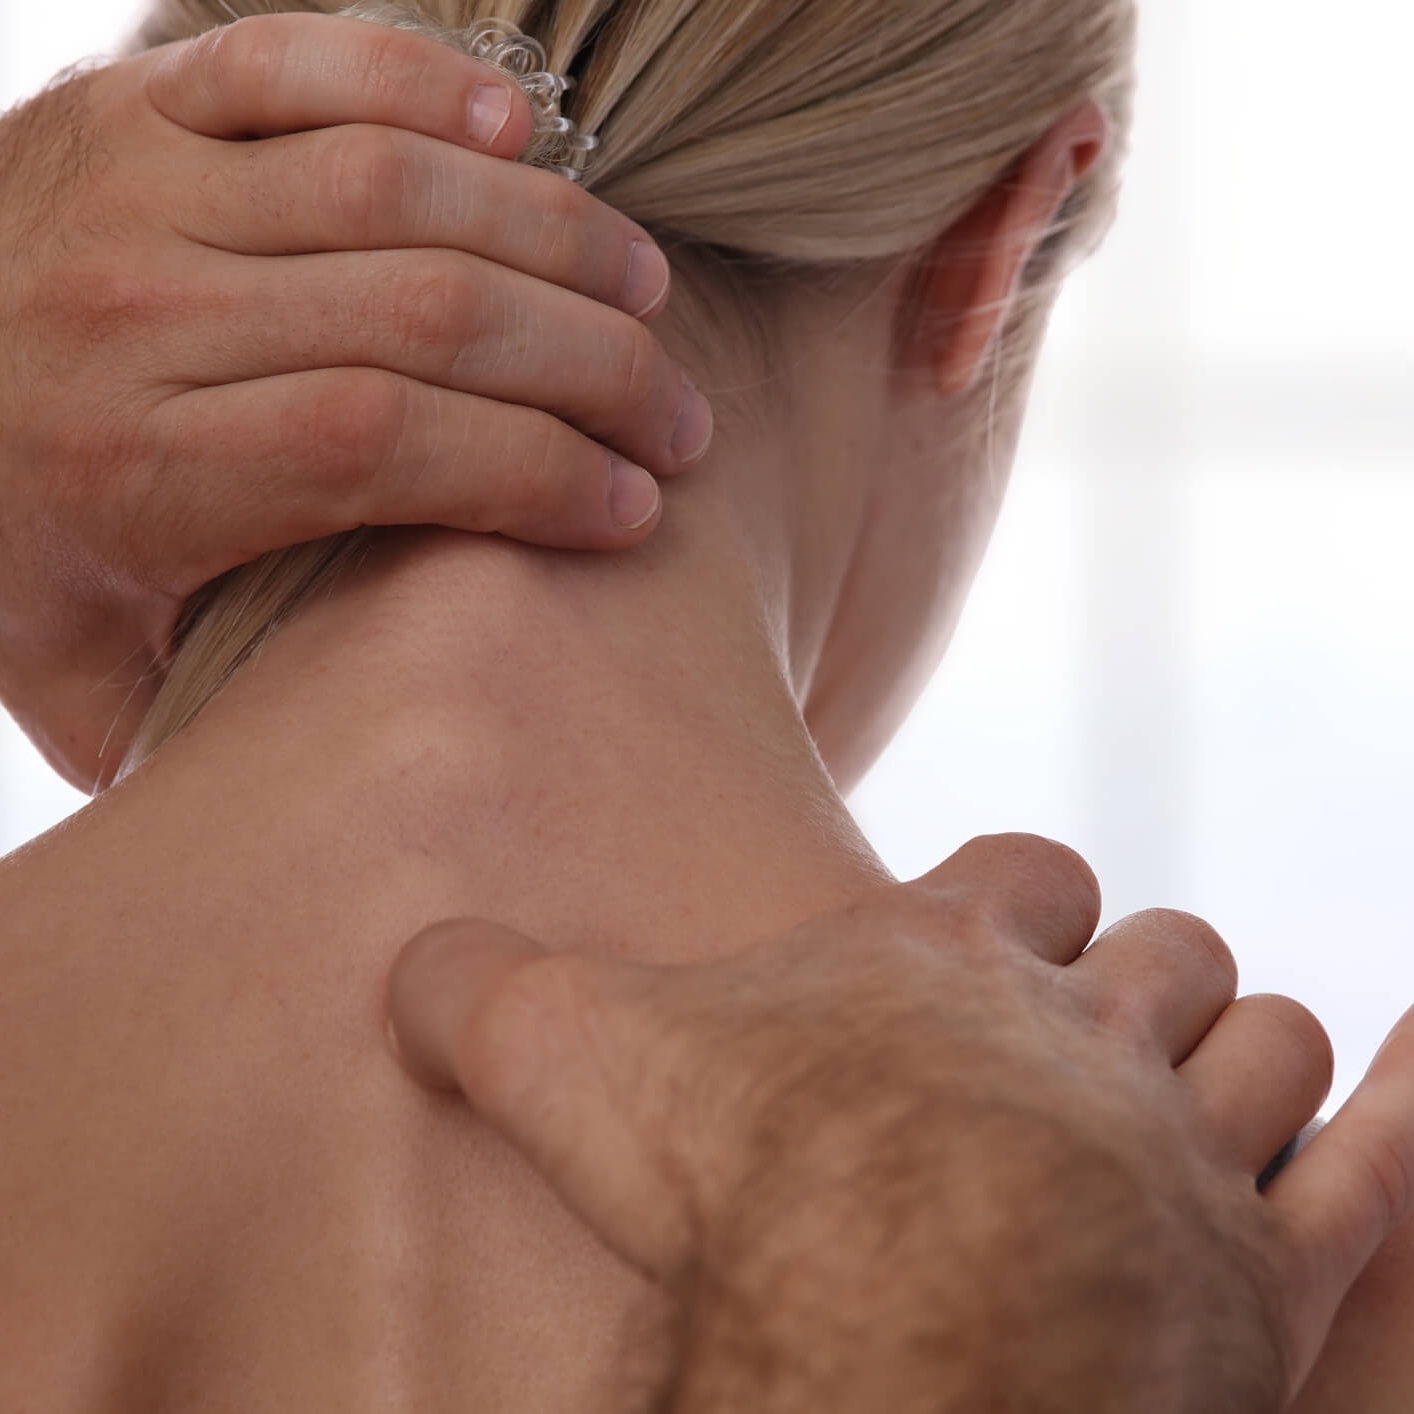 Woman receiving spine adjustment near neck